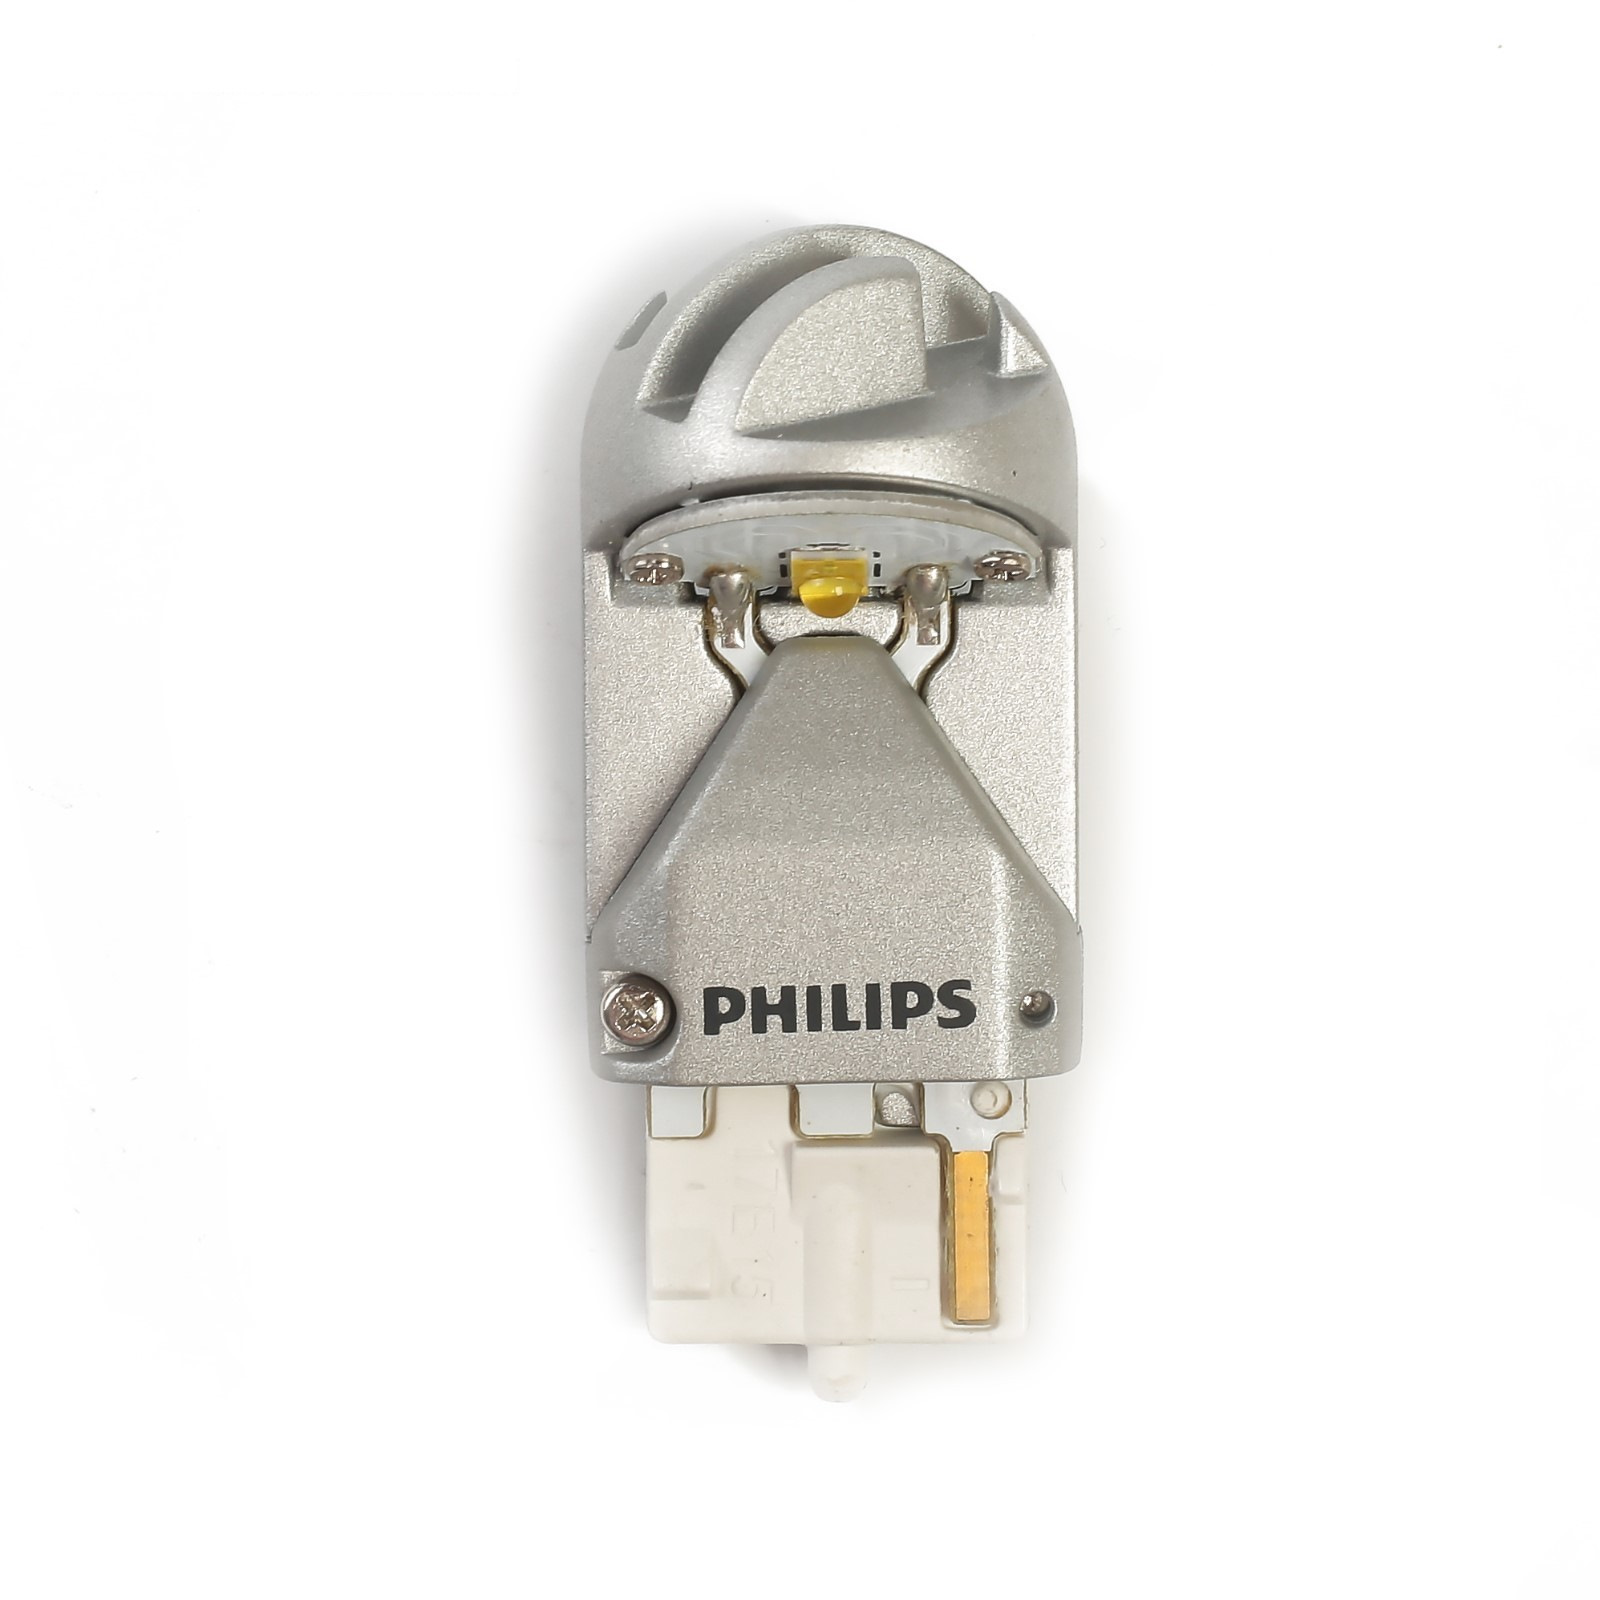 Led 5w 12v. W21w led Philips. Philips w21w 12795x1. W16w лампа светодиодная Philips. W21/5v лампа светодиодная Philips.